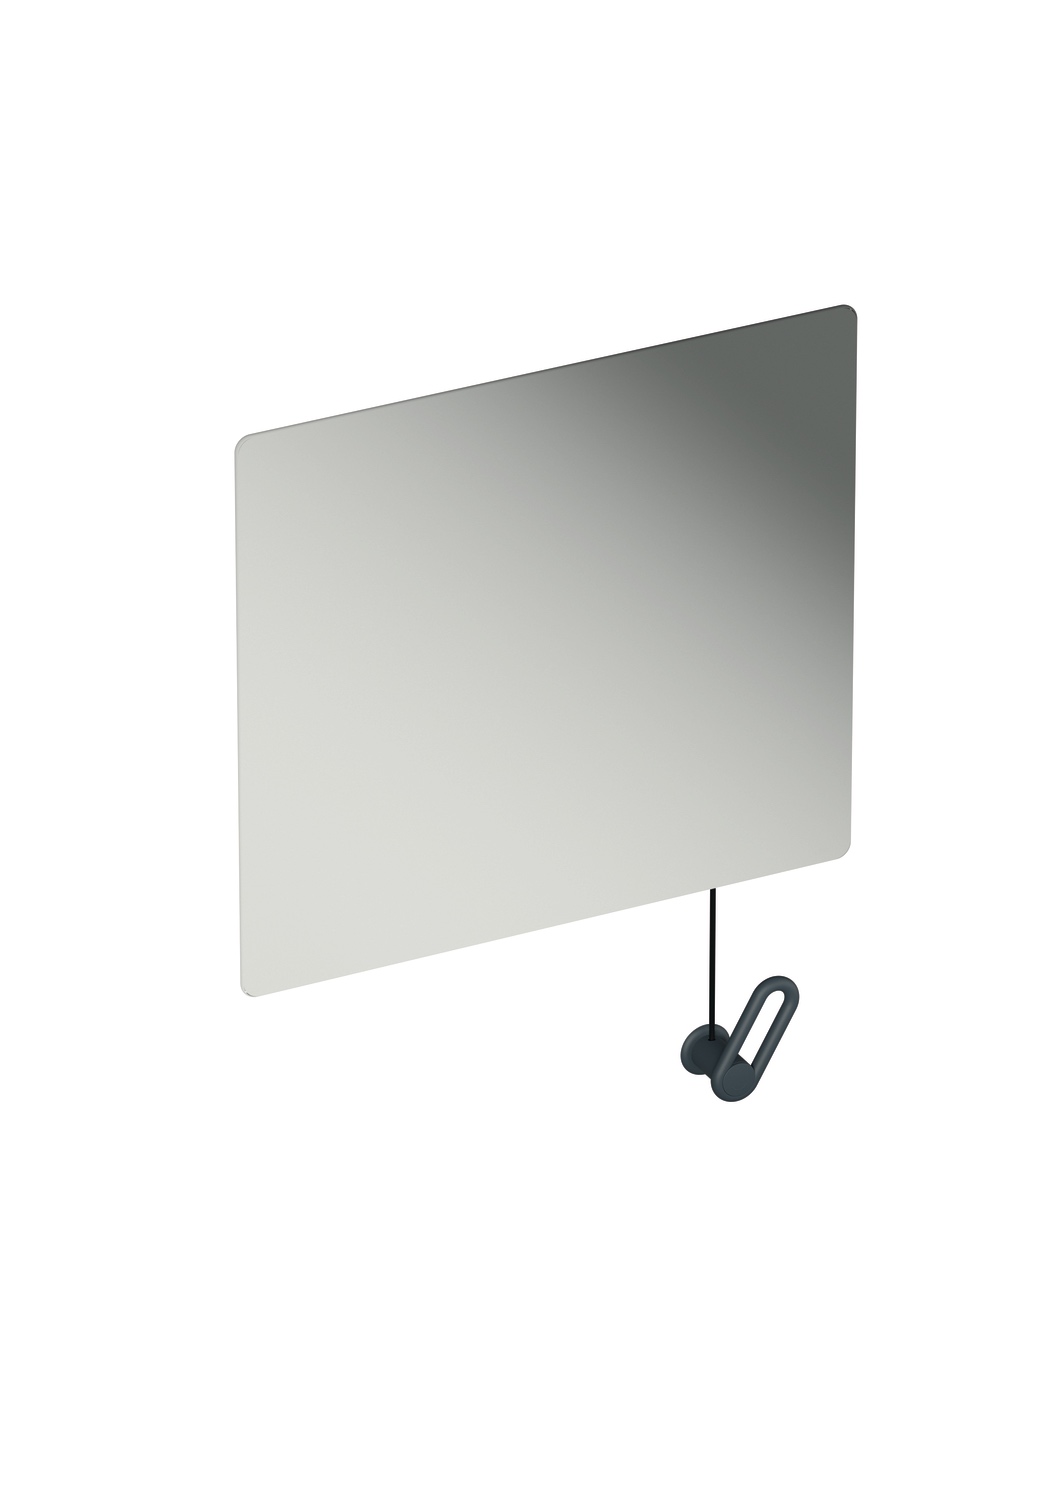 HEWI Kippspiegel „Serie 801“ 60 × 54 cm in Anthrazitgrau